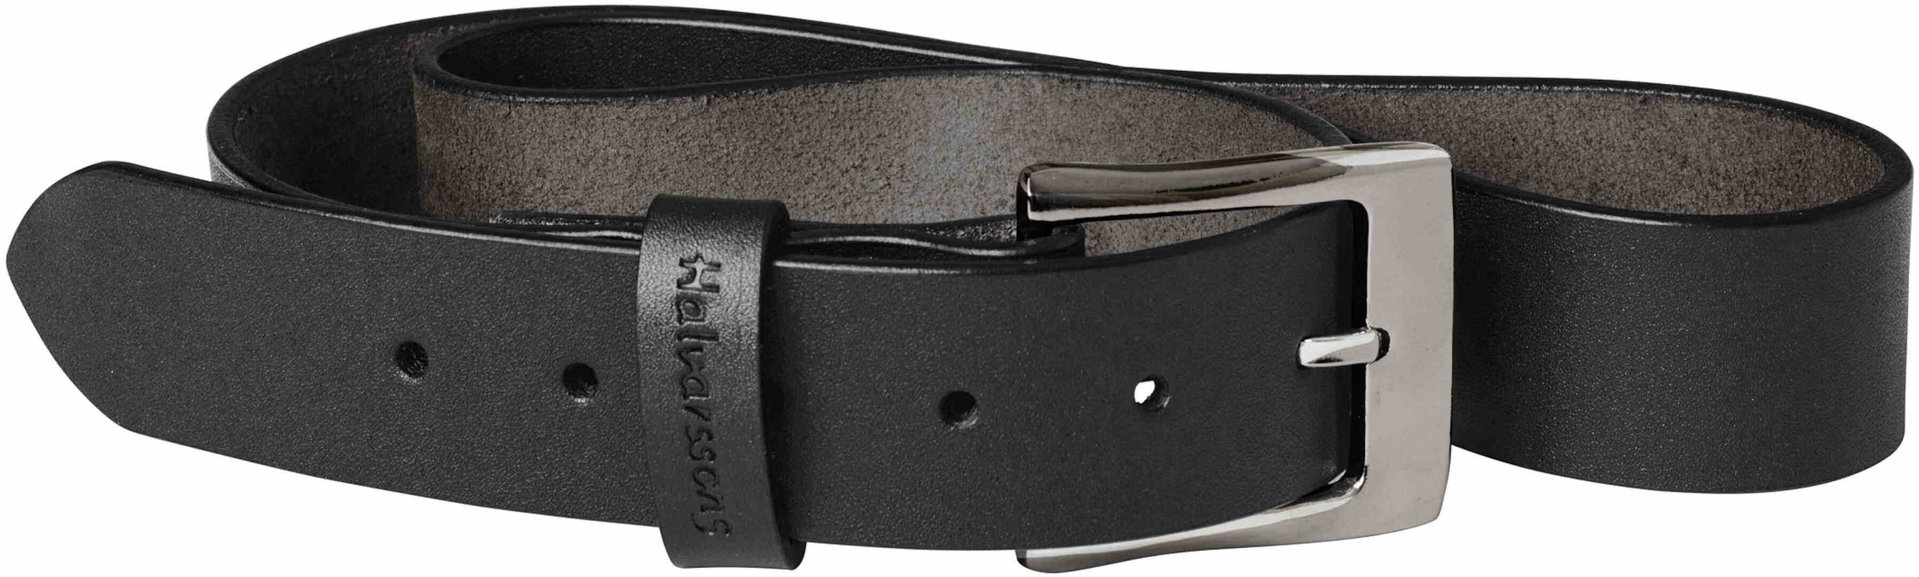 Image of Halvarssons Leather Cintura, nero, dimensione L